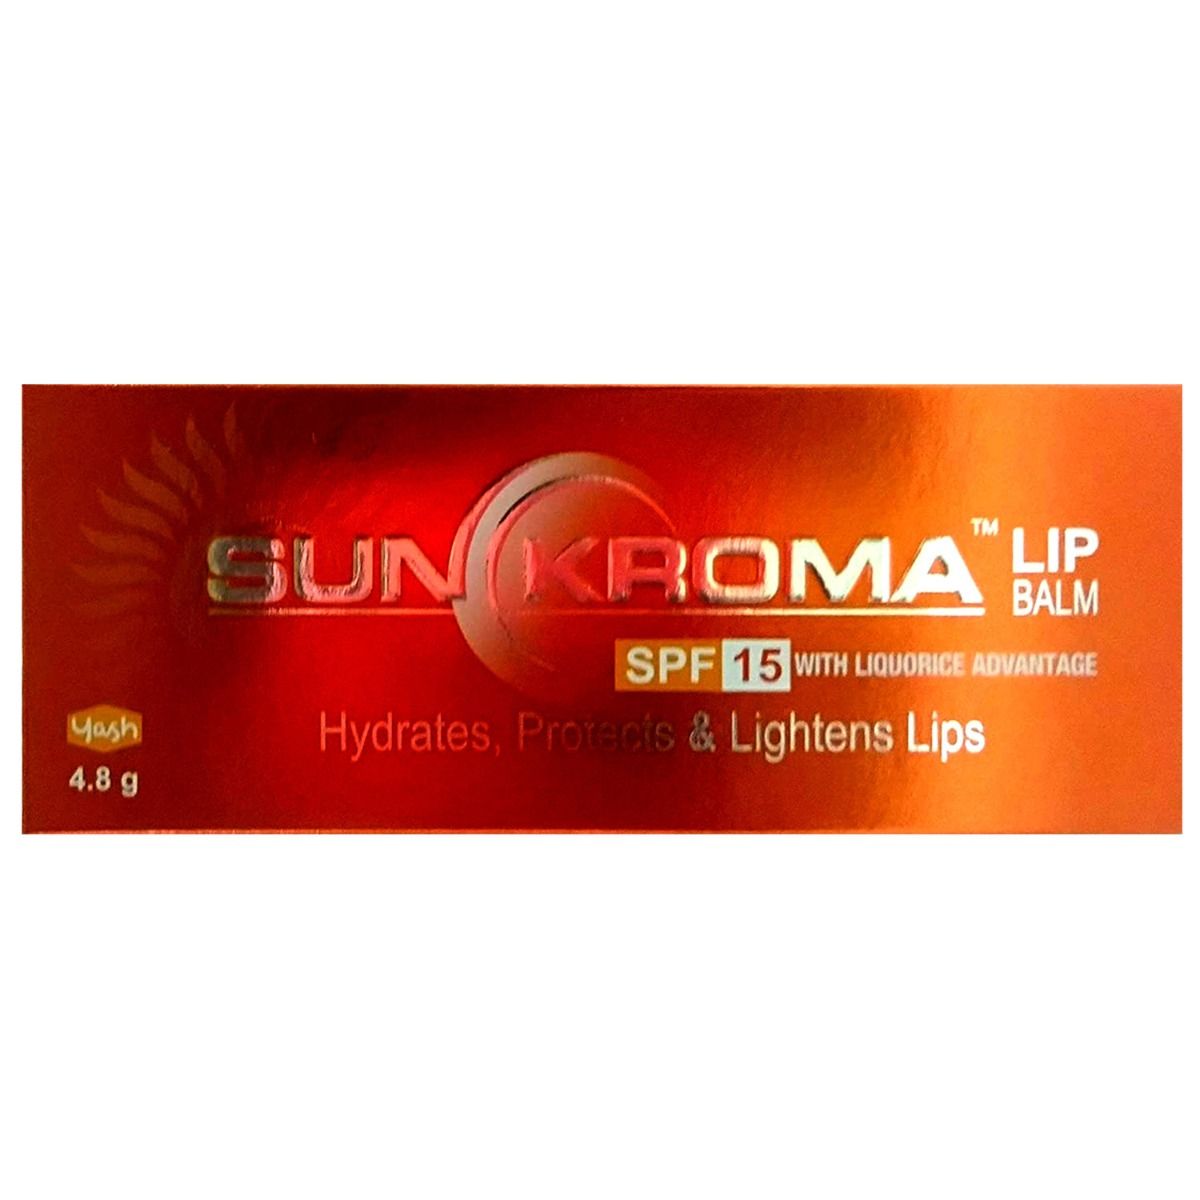 Buy Sunkroma Lip Balm SPF 15, 4.8 gm Online